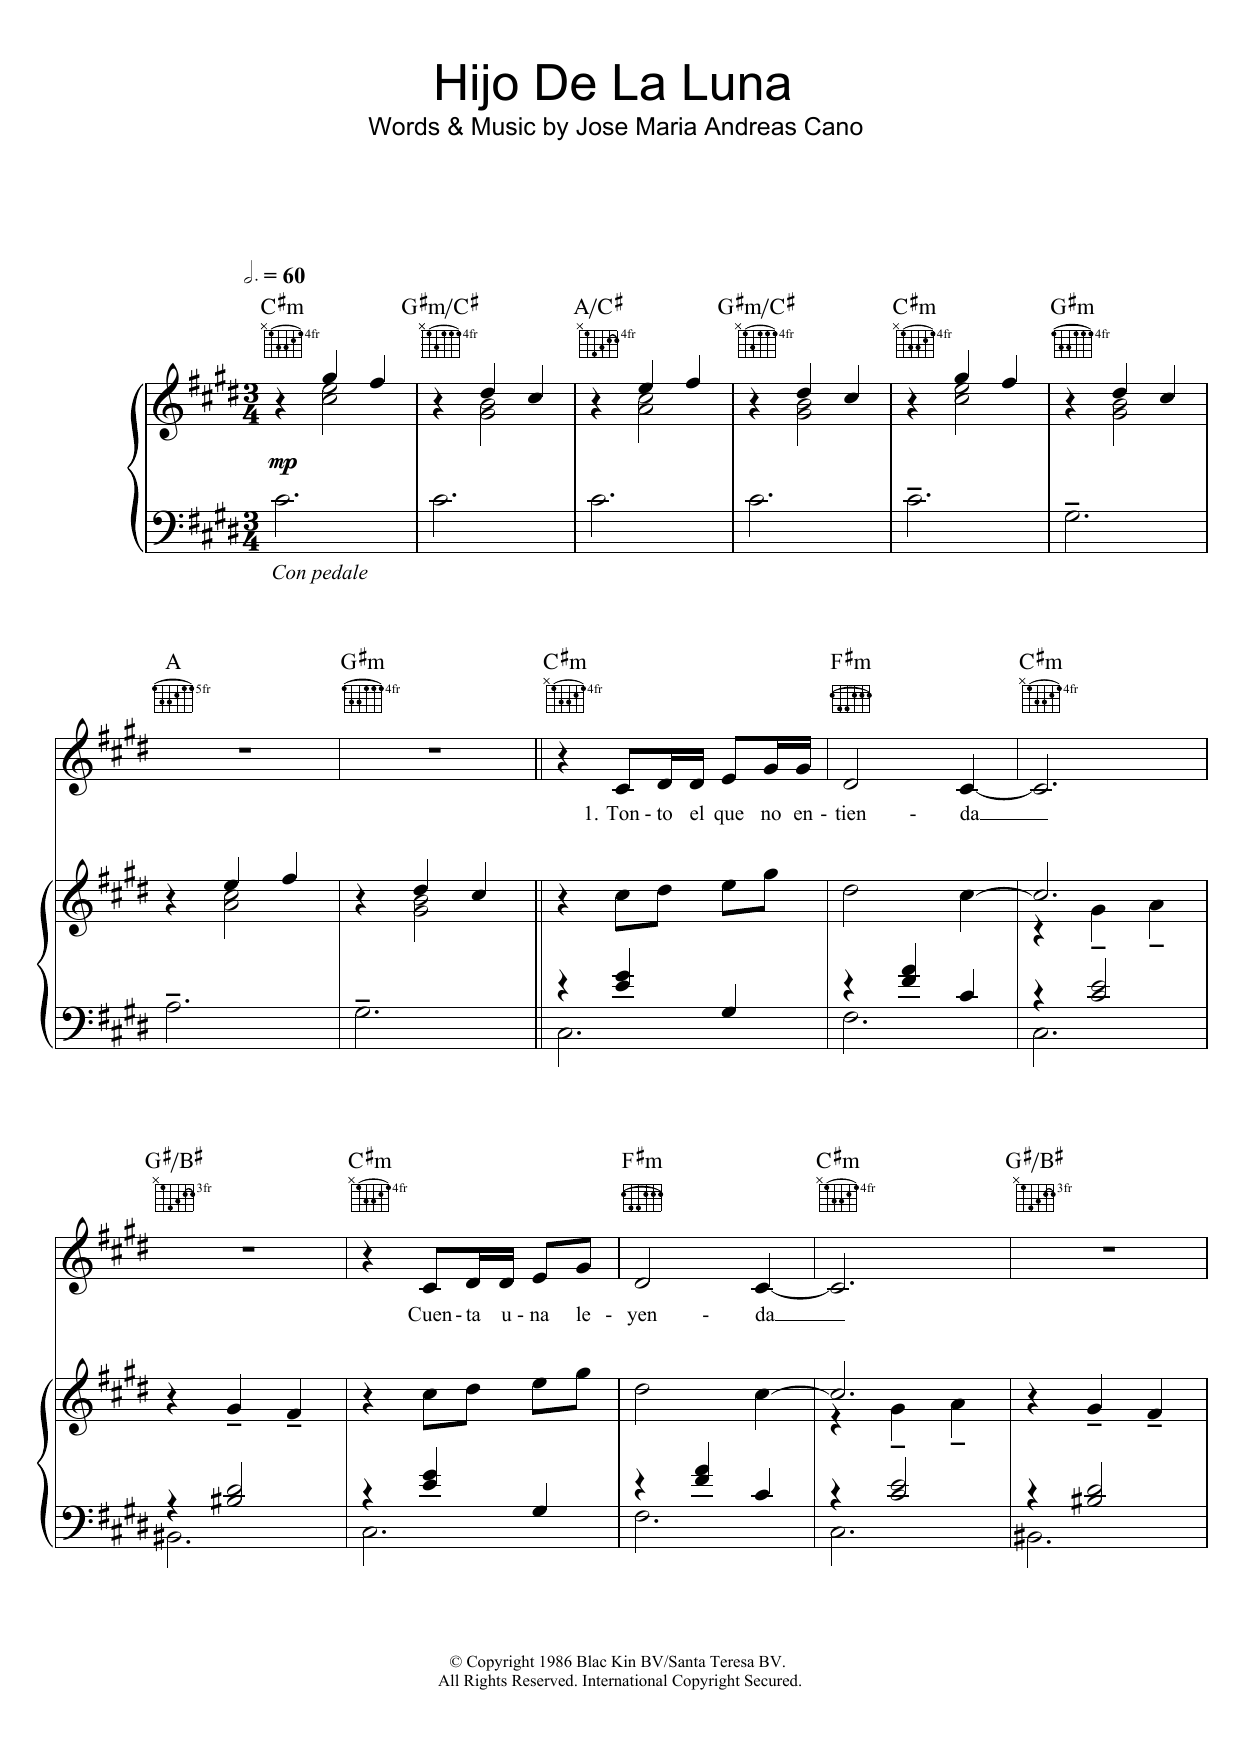 Mecano Hijo De La Luna Sheet Music Notes & Chords for Piano, Vocal & Guitar (Right-Hand Melody) - Download or Print PDF